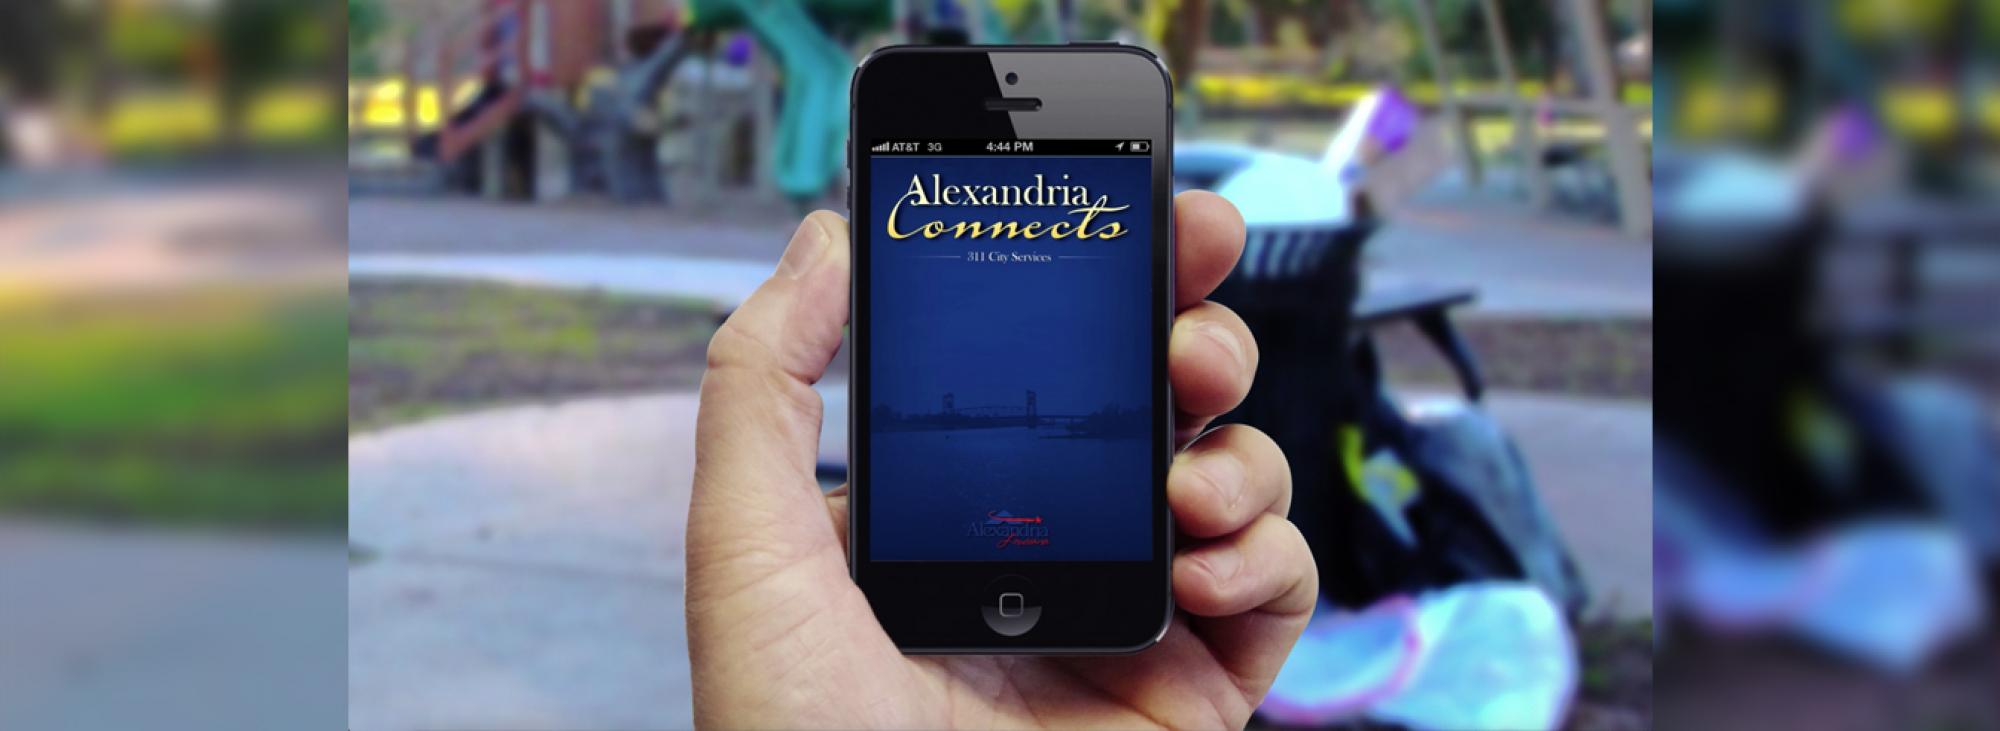 Alexandria Connects app - City of Alexandria, LA mayor